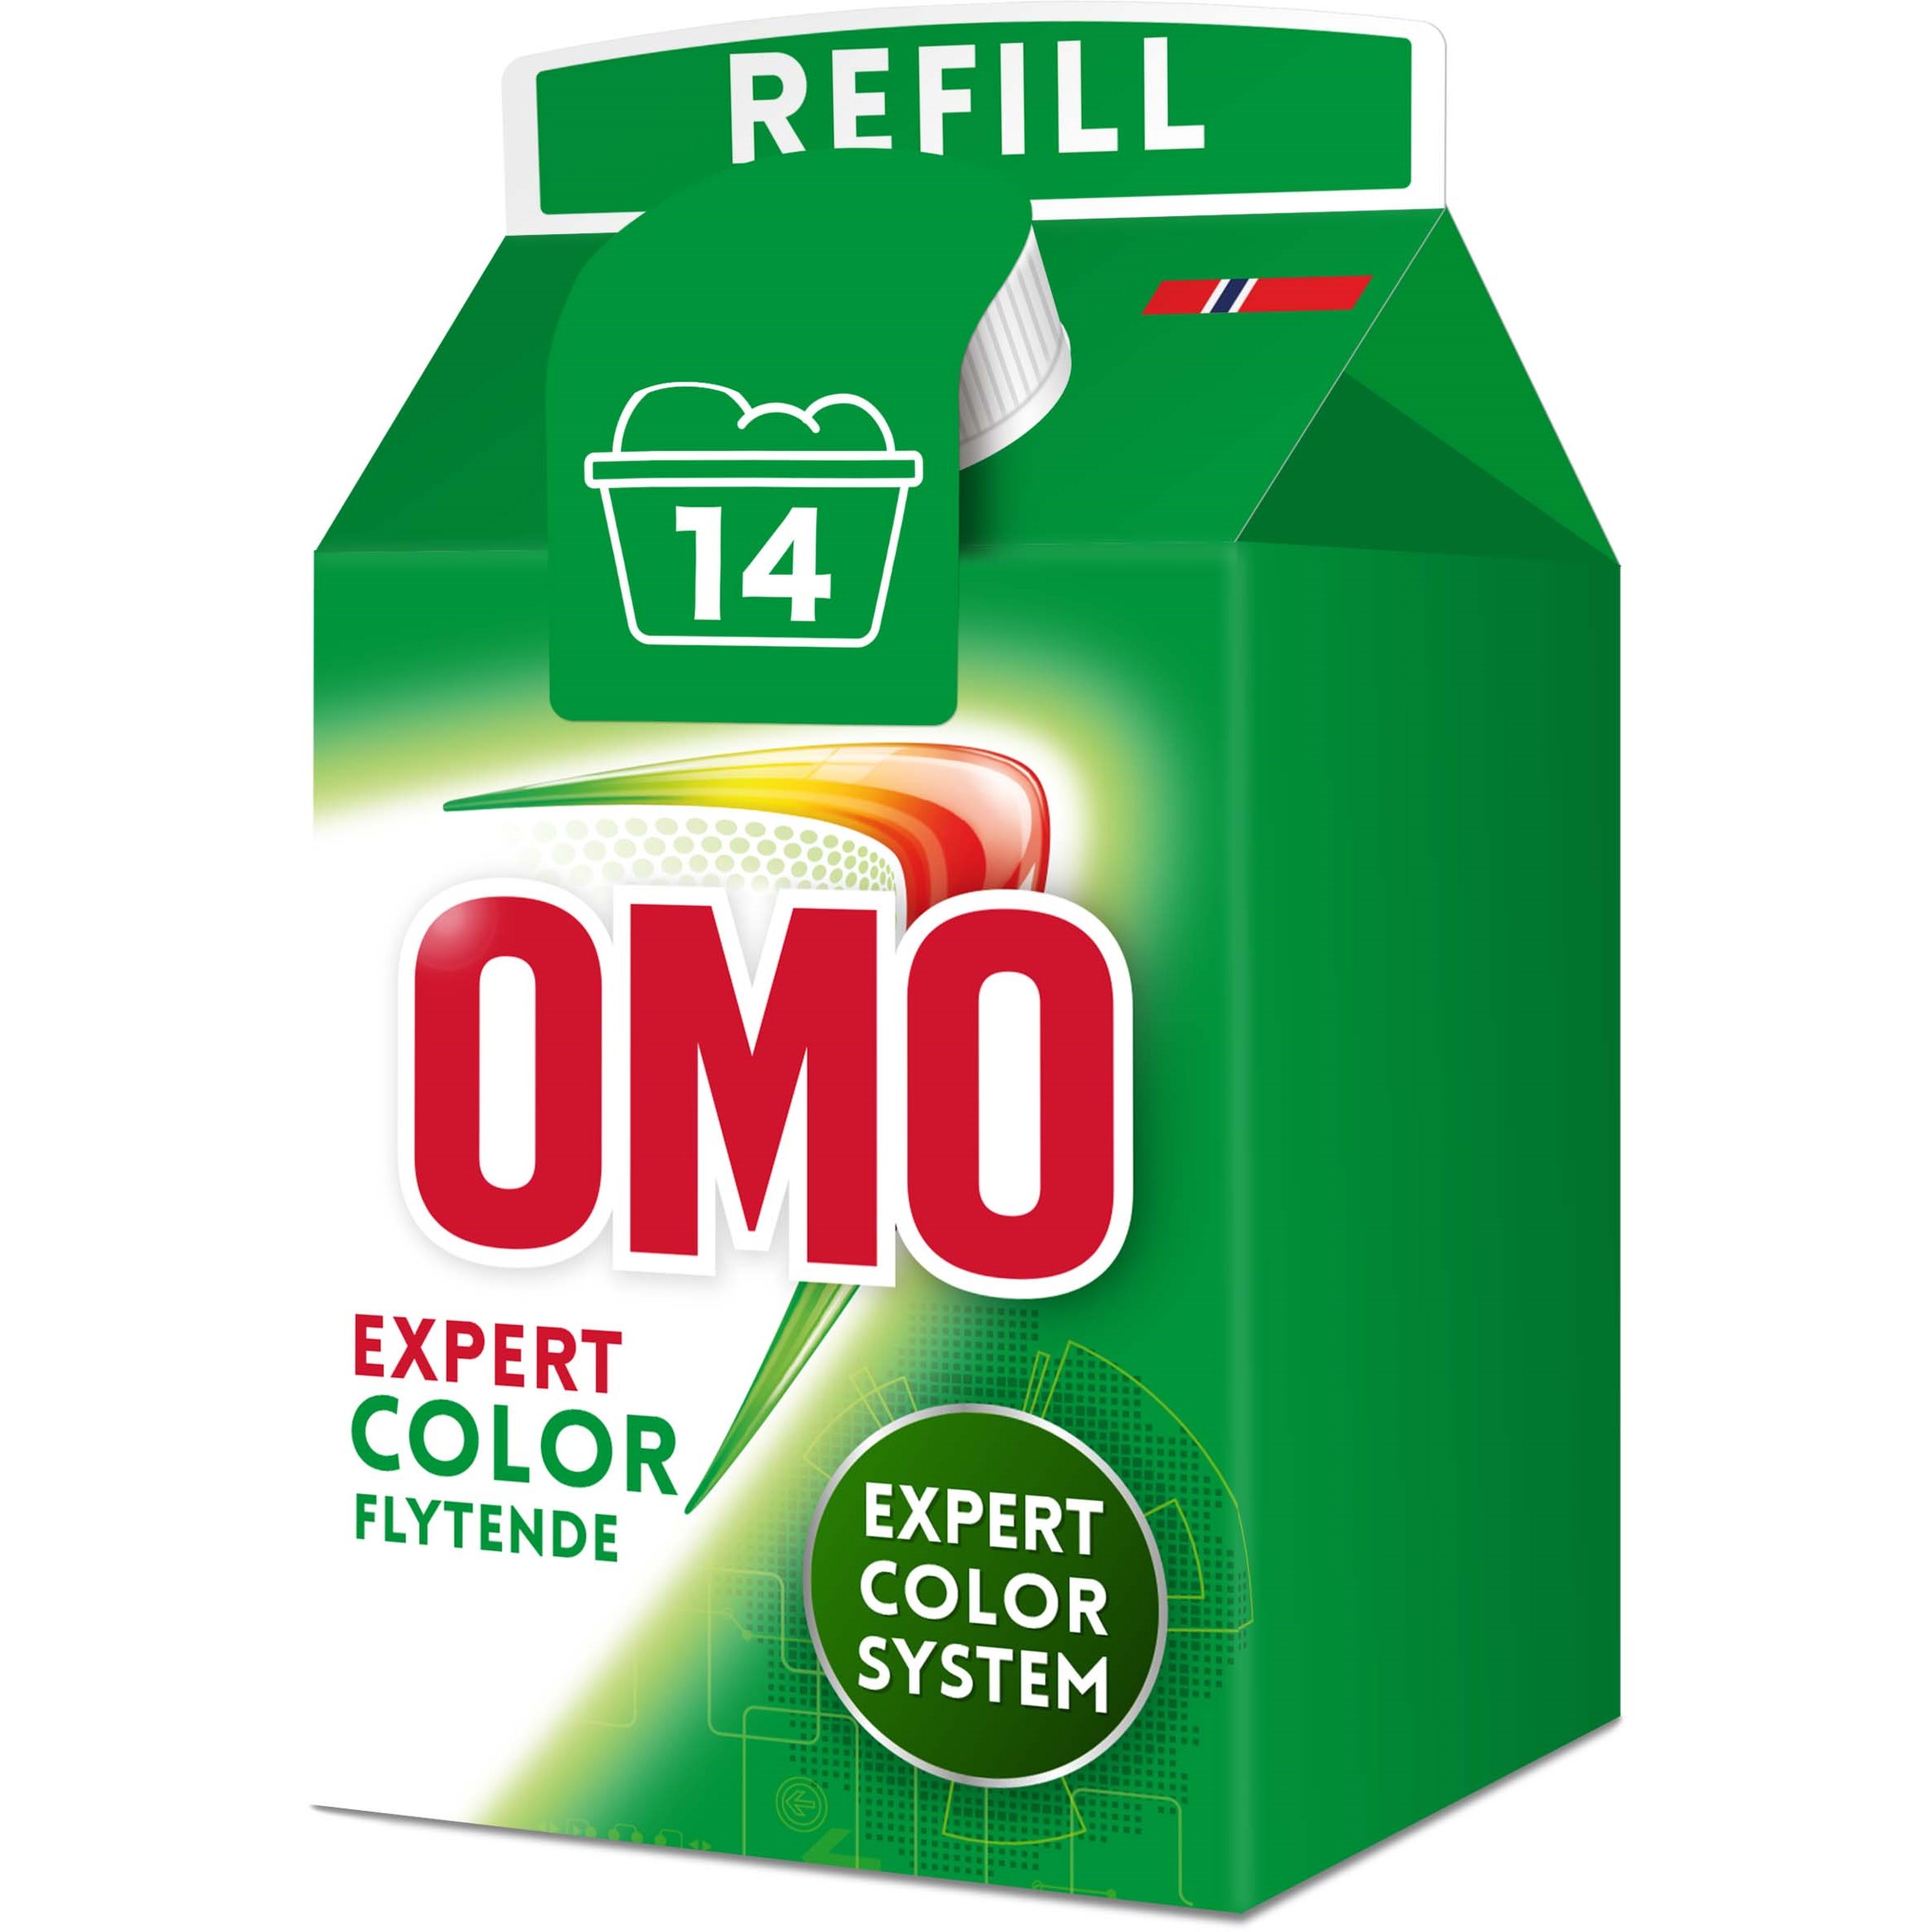 Bilde av Omo Expert Color Liquid Refill 490 Ml